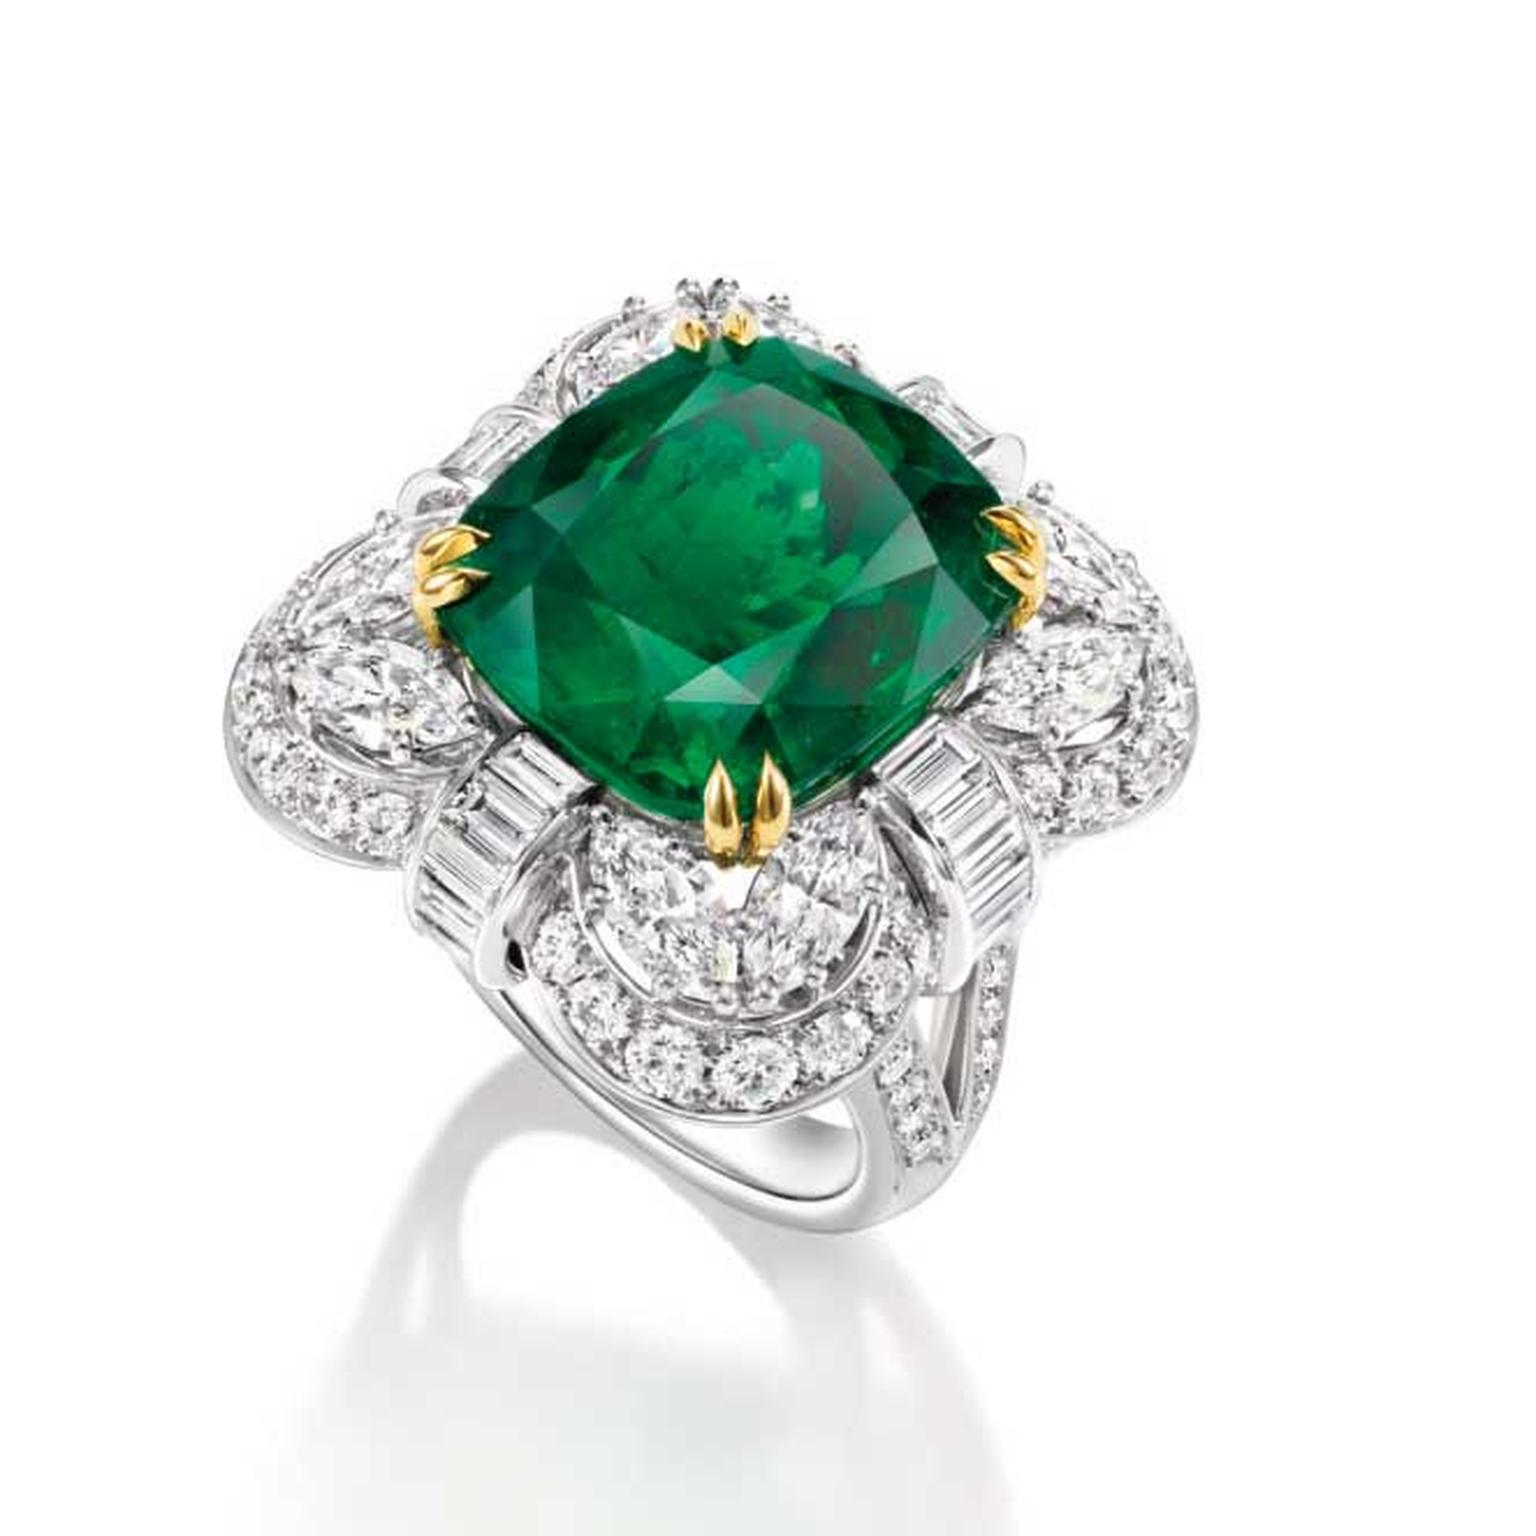 Enchanting emeralds: the birthstone of 